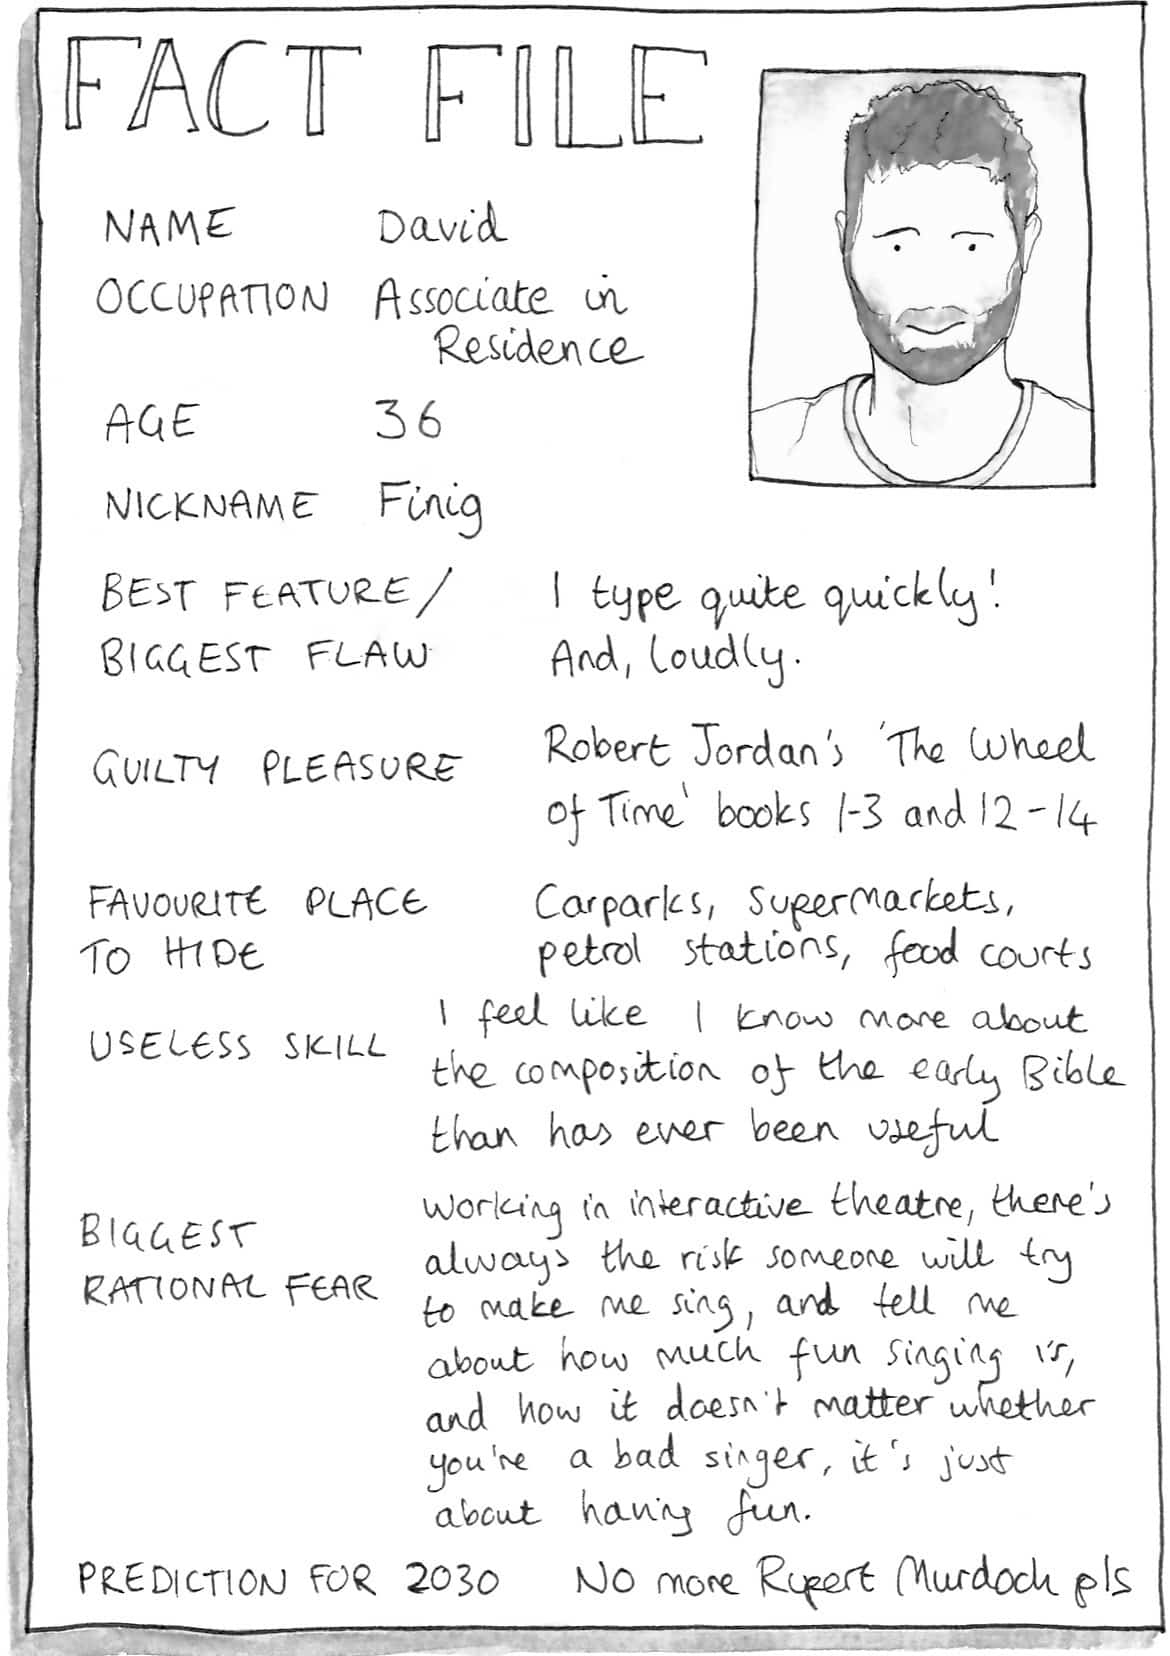 Drawing of David's fact file.